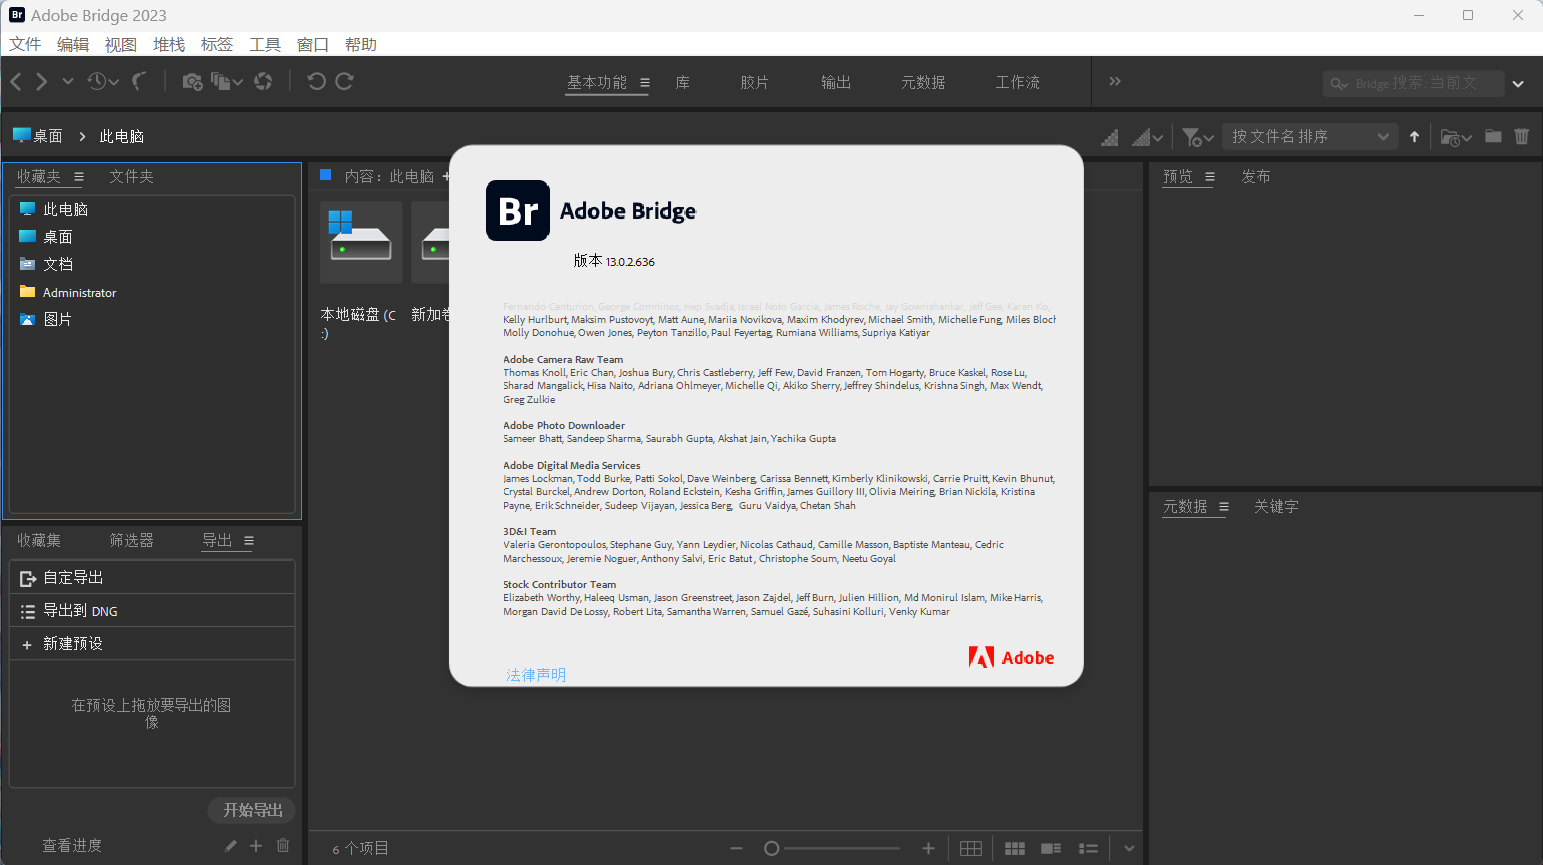 Adobe Bridge 2023 v13.0.4.755 for ios download free